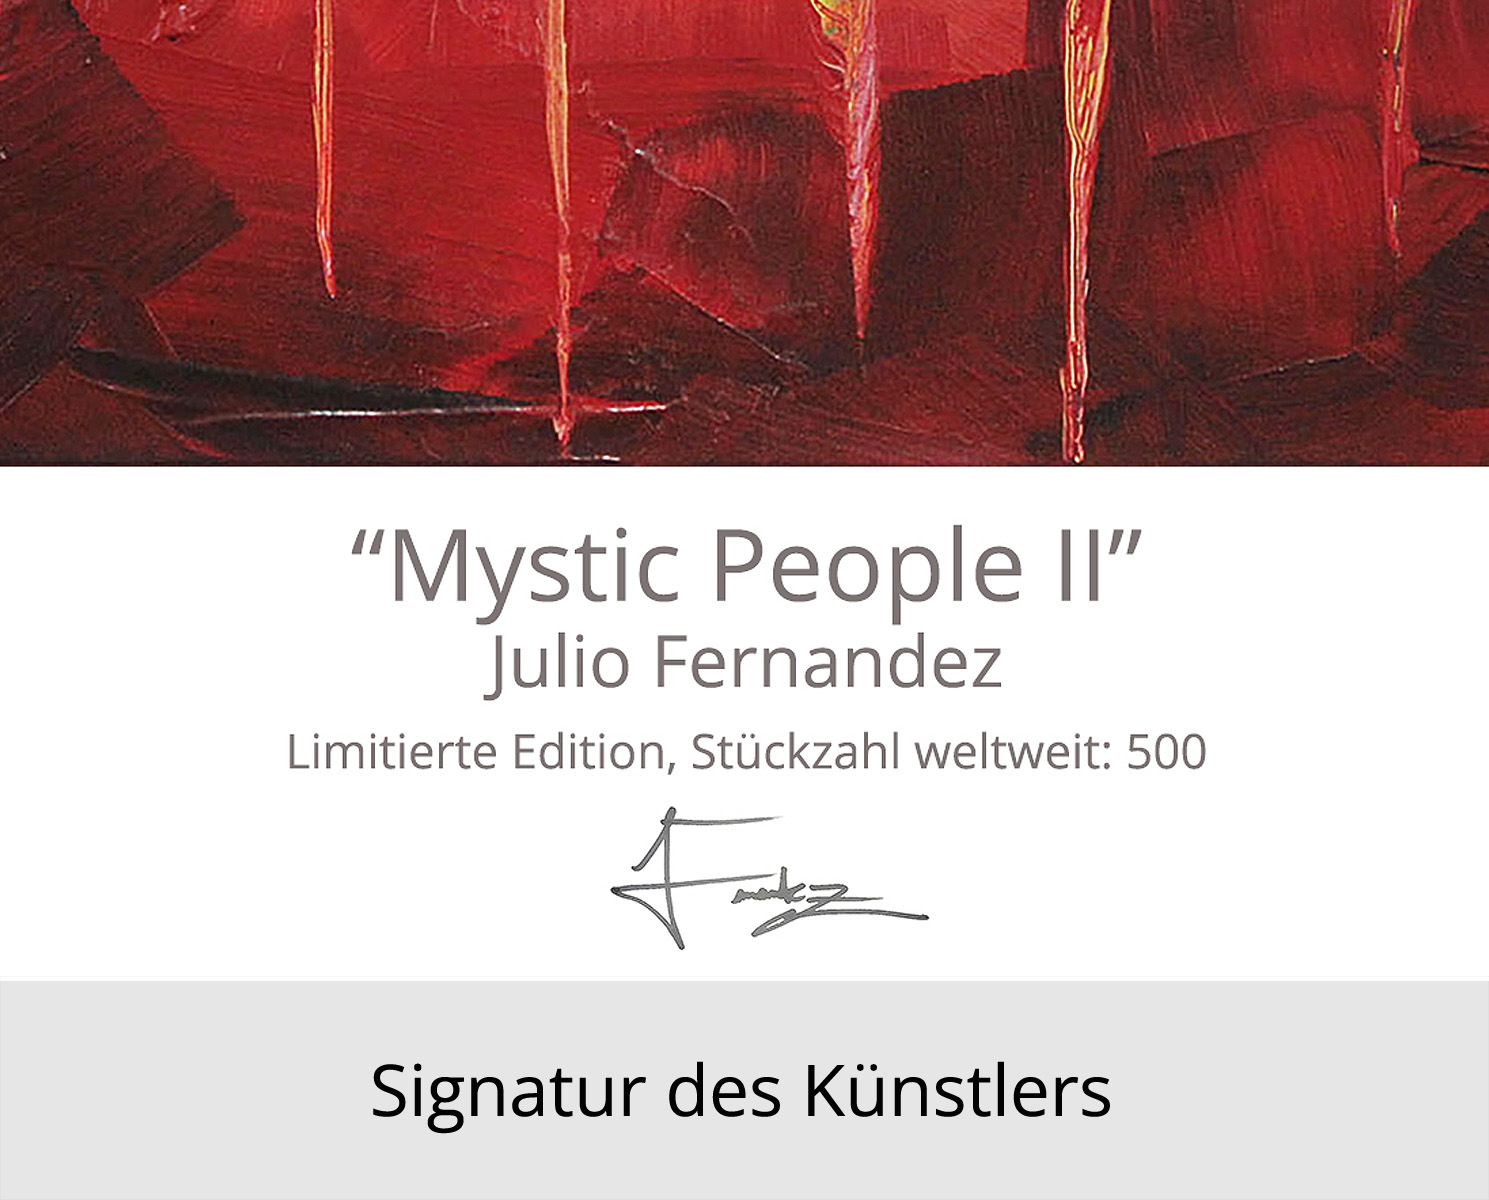 Limitierte Edition auf Papier, J. Fernandez "Mystic People II", Fineartprint